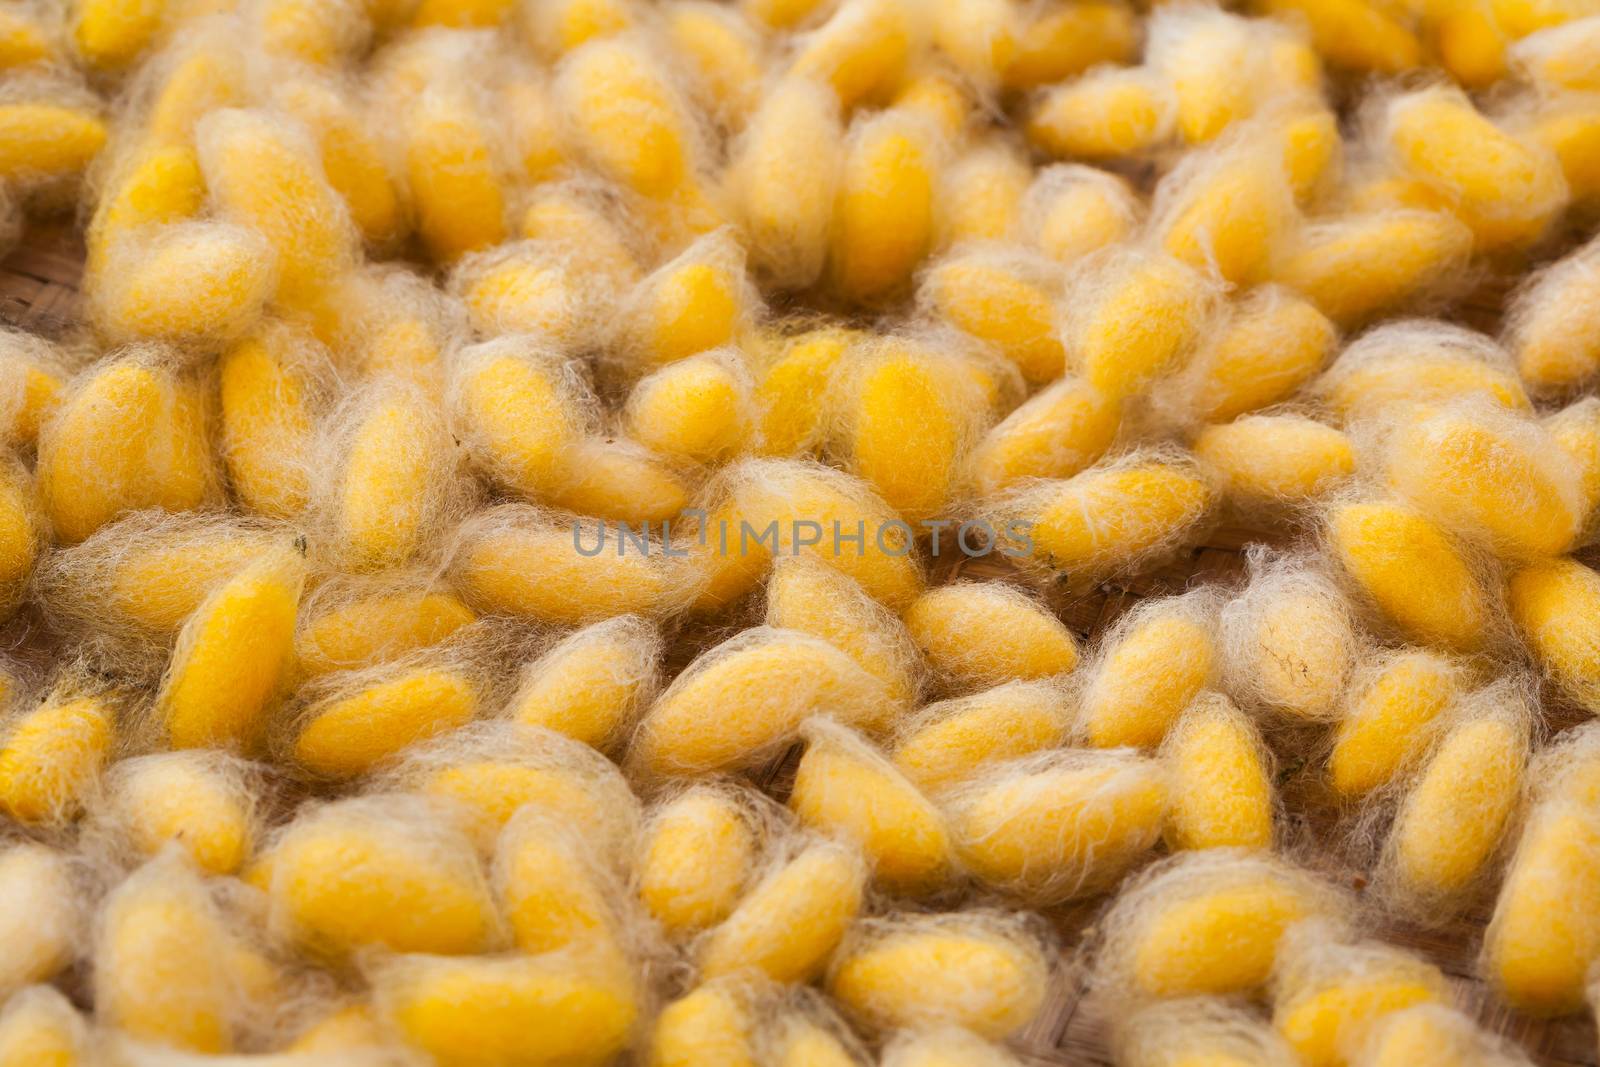 Close up Golden color silkworm cocoon